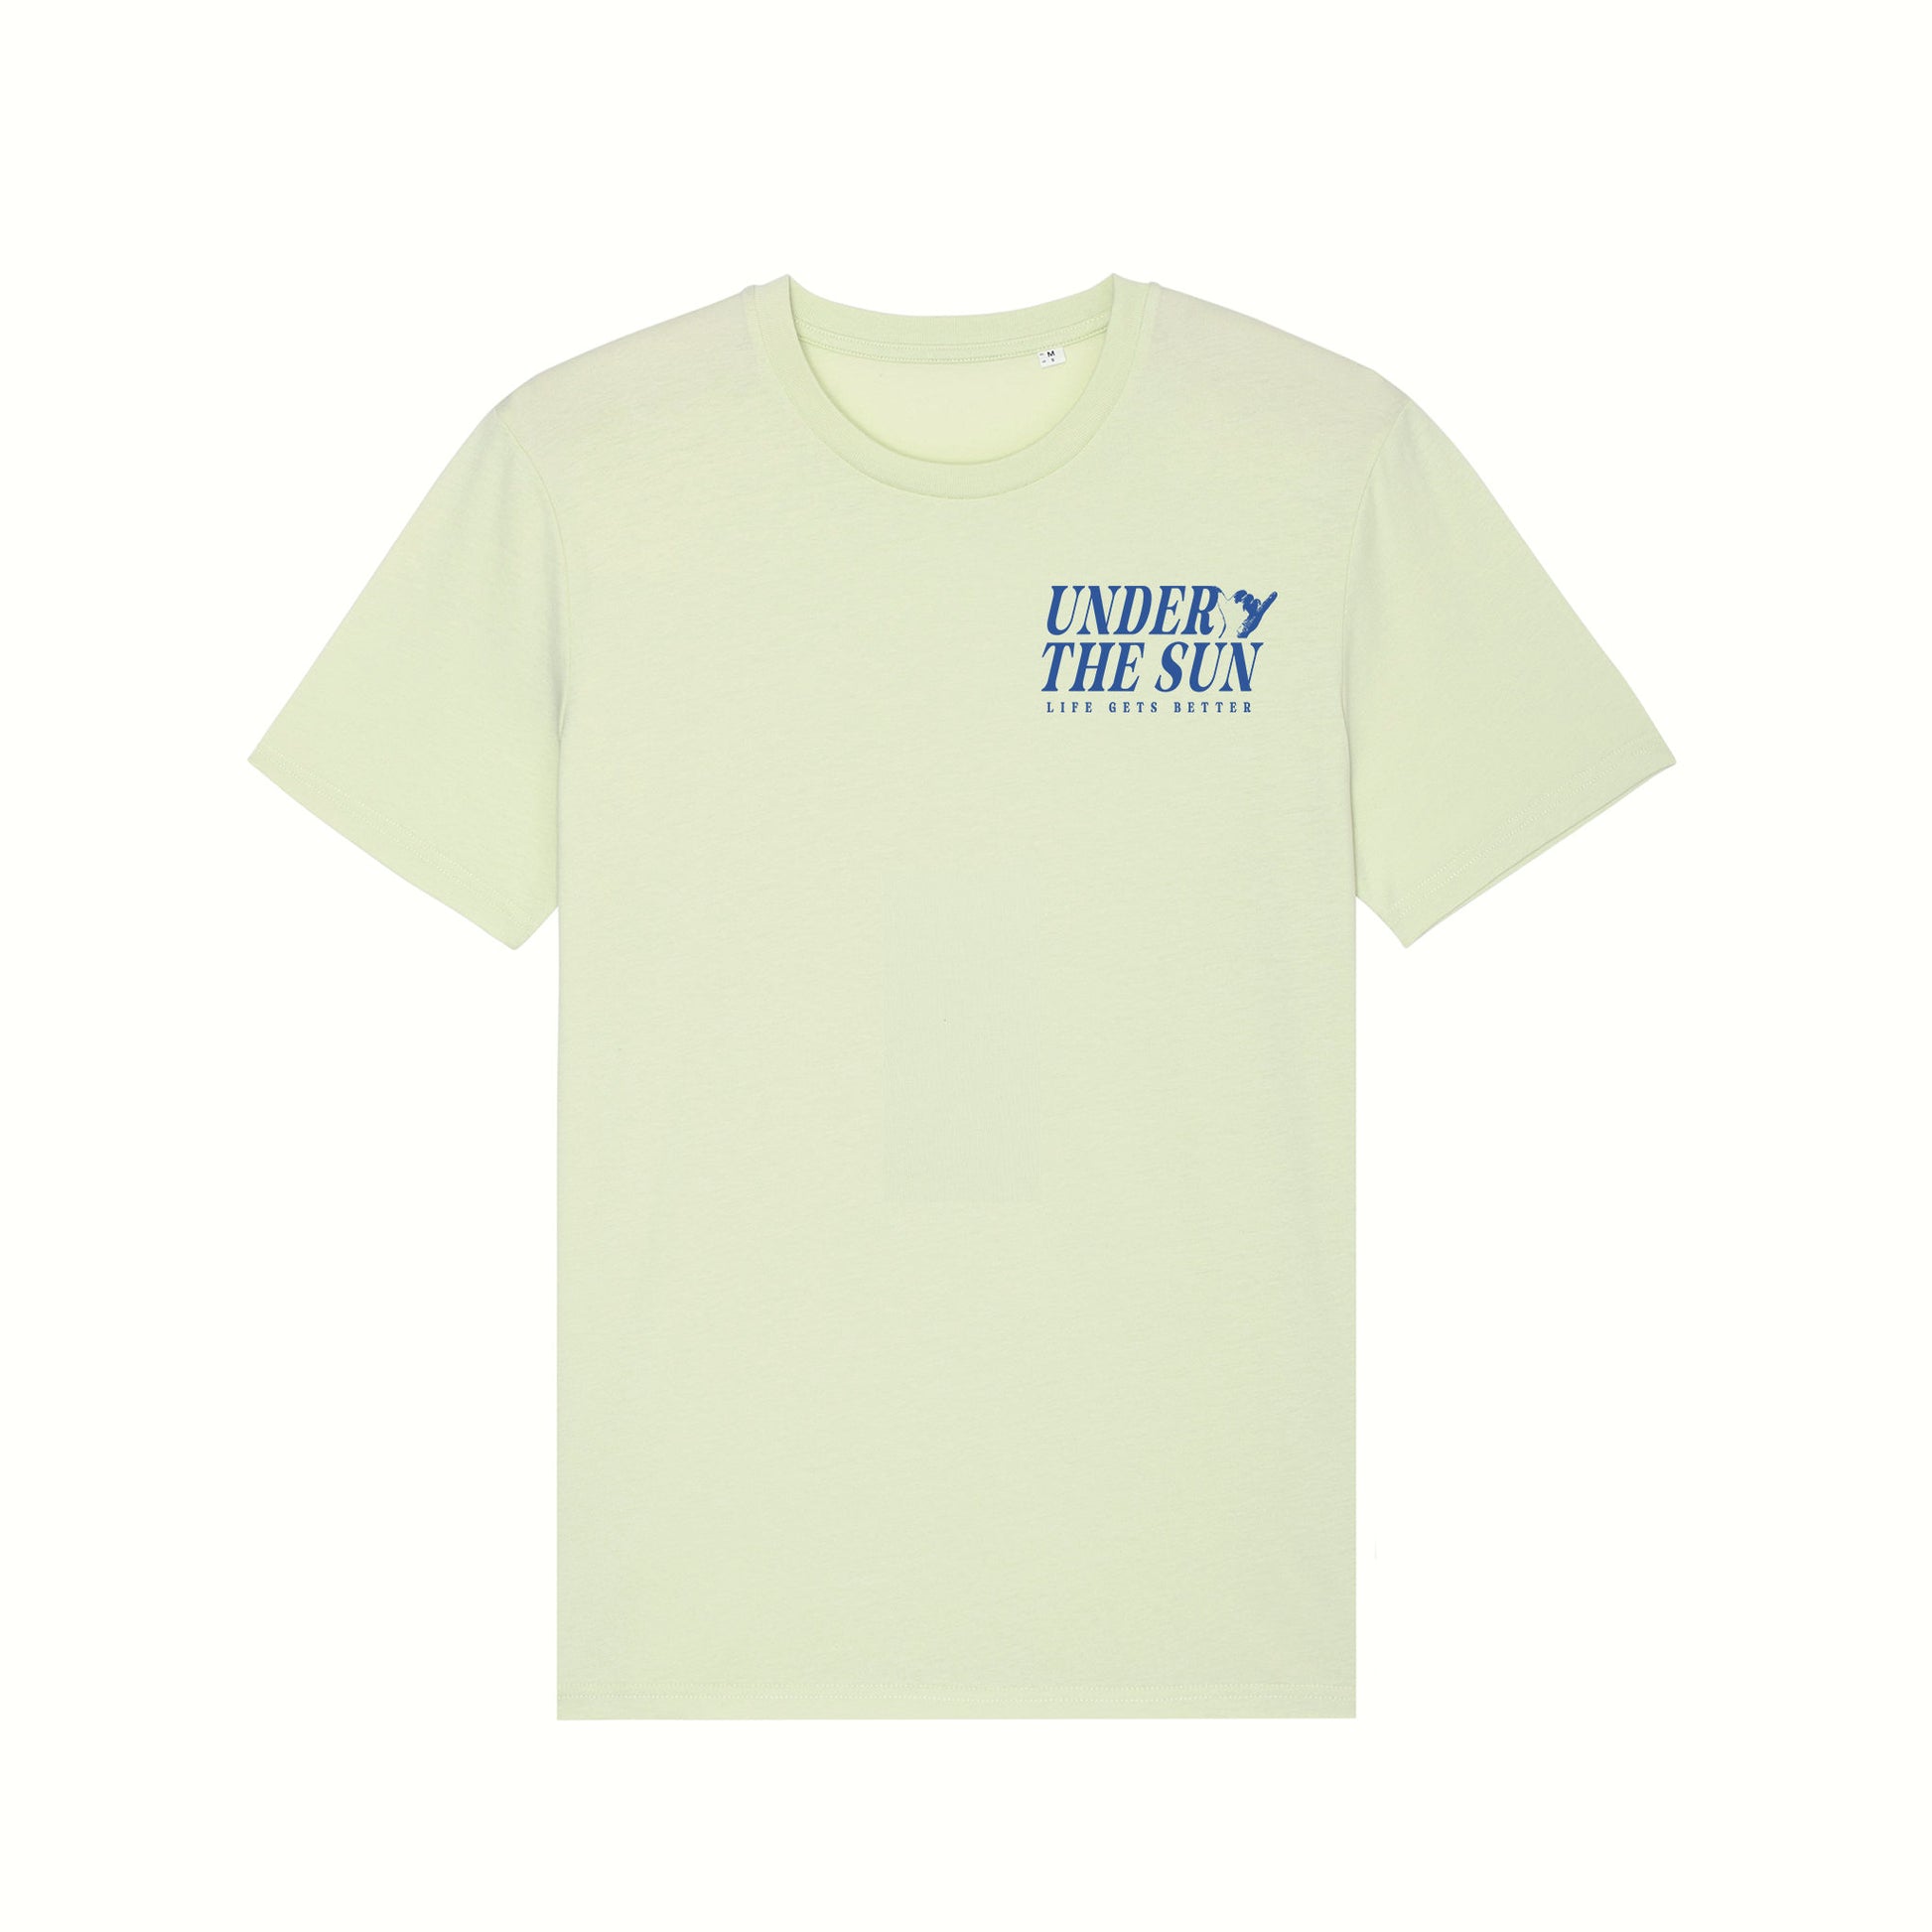 Fear The Ordinary light mint premium organic cotton t-shirt with blue cobalt under the sun summer inspired front print.